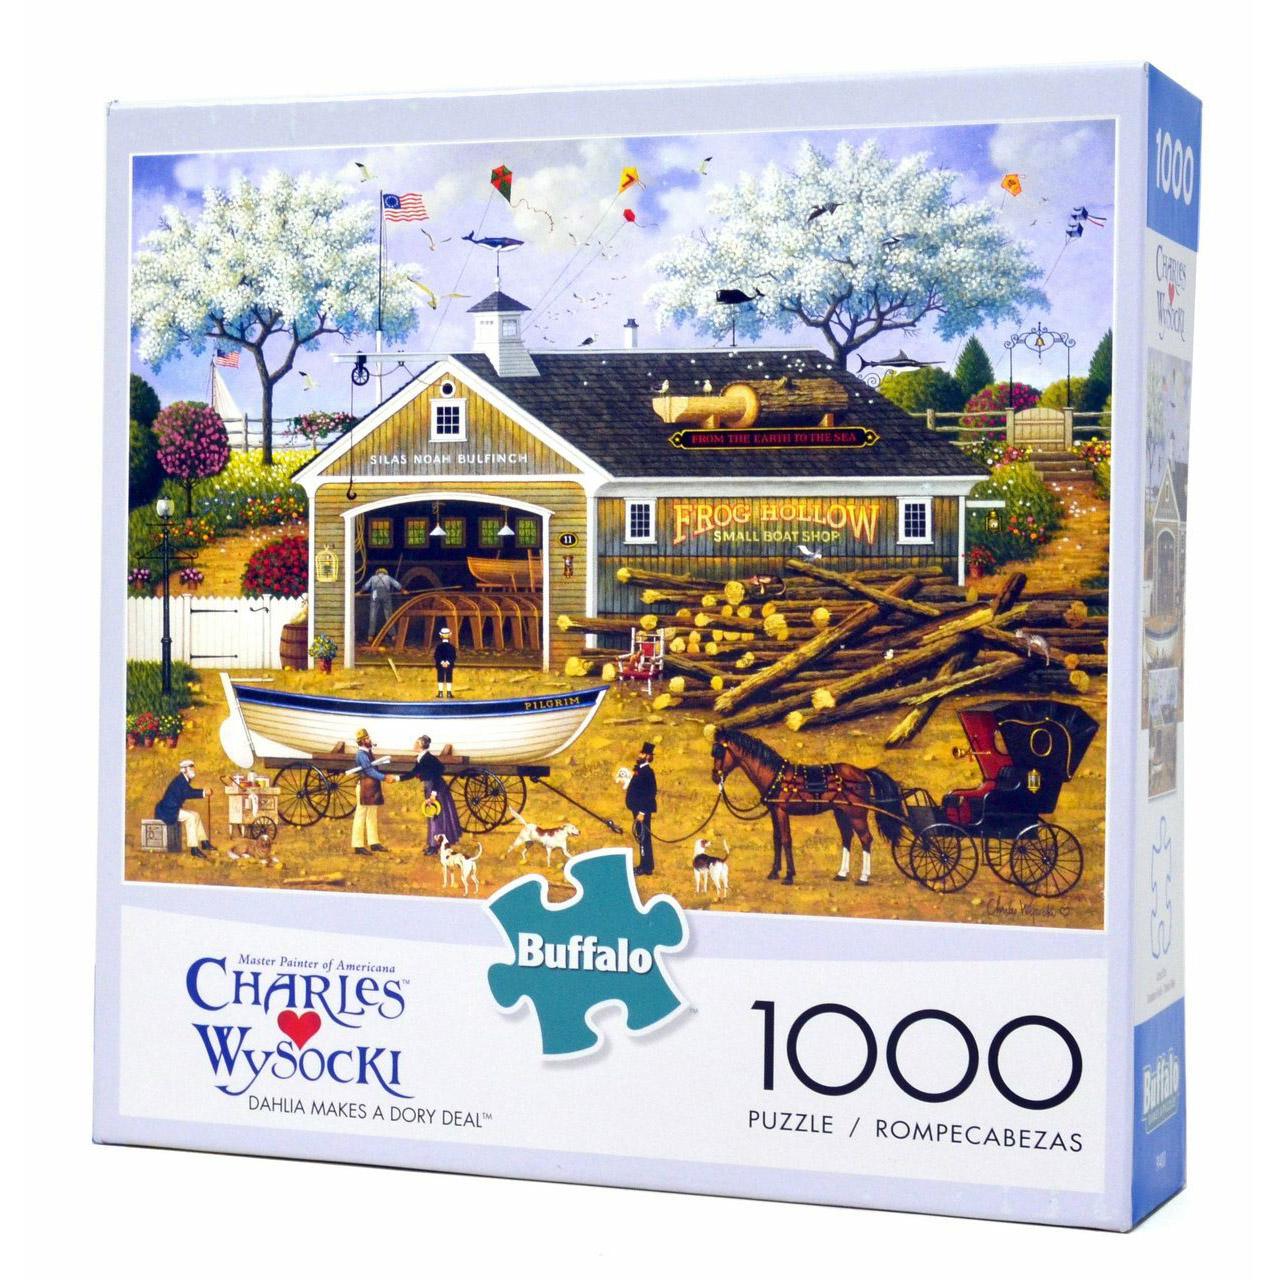 1000-Piece Buffalo Games Dahlia Makes a Dory Deal Jigsaw Puzzle for $7.99